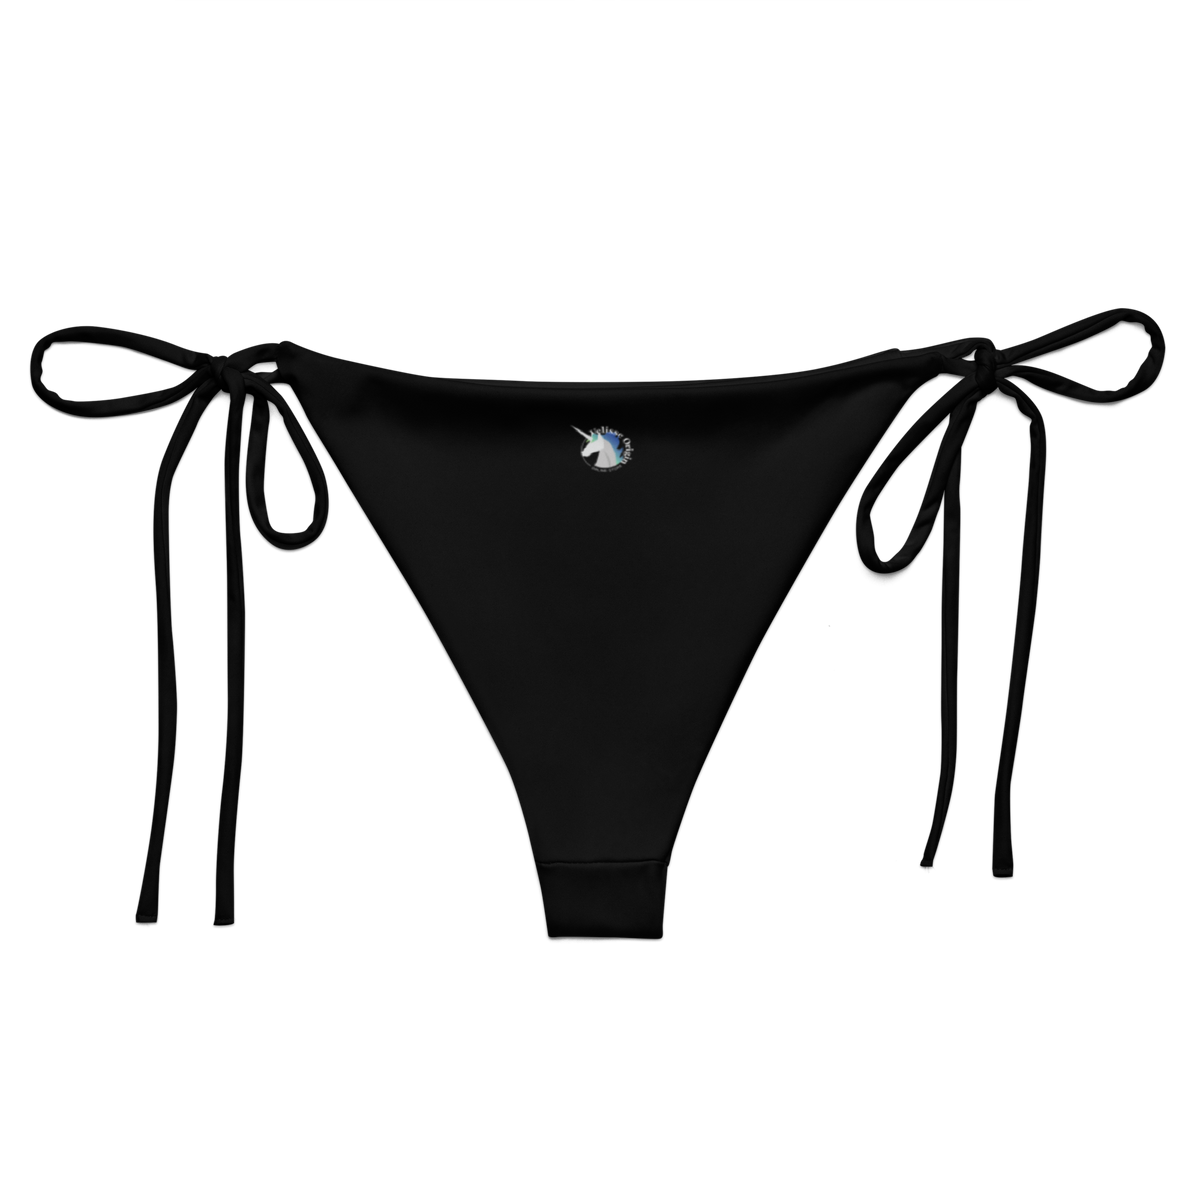 Velisse Origin bikini bottom, bikini bottom, black bikini bottom, unicorn, simple bikini, minimalistic swimwear, minimalistic, minimalistic bikini